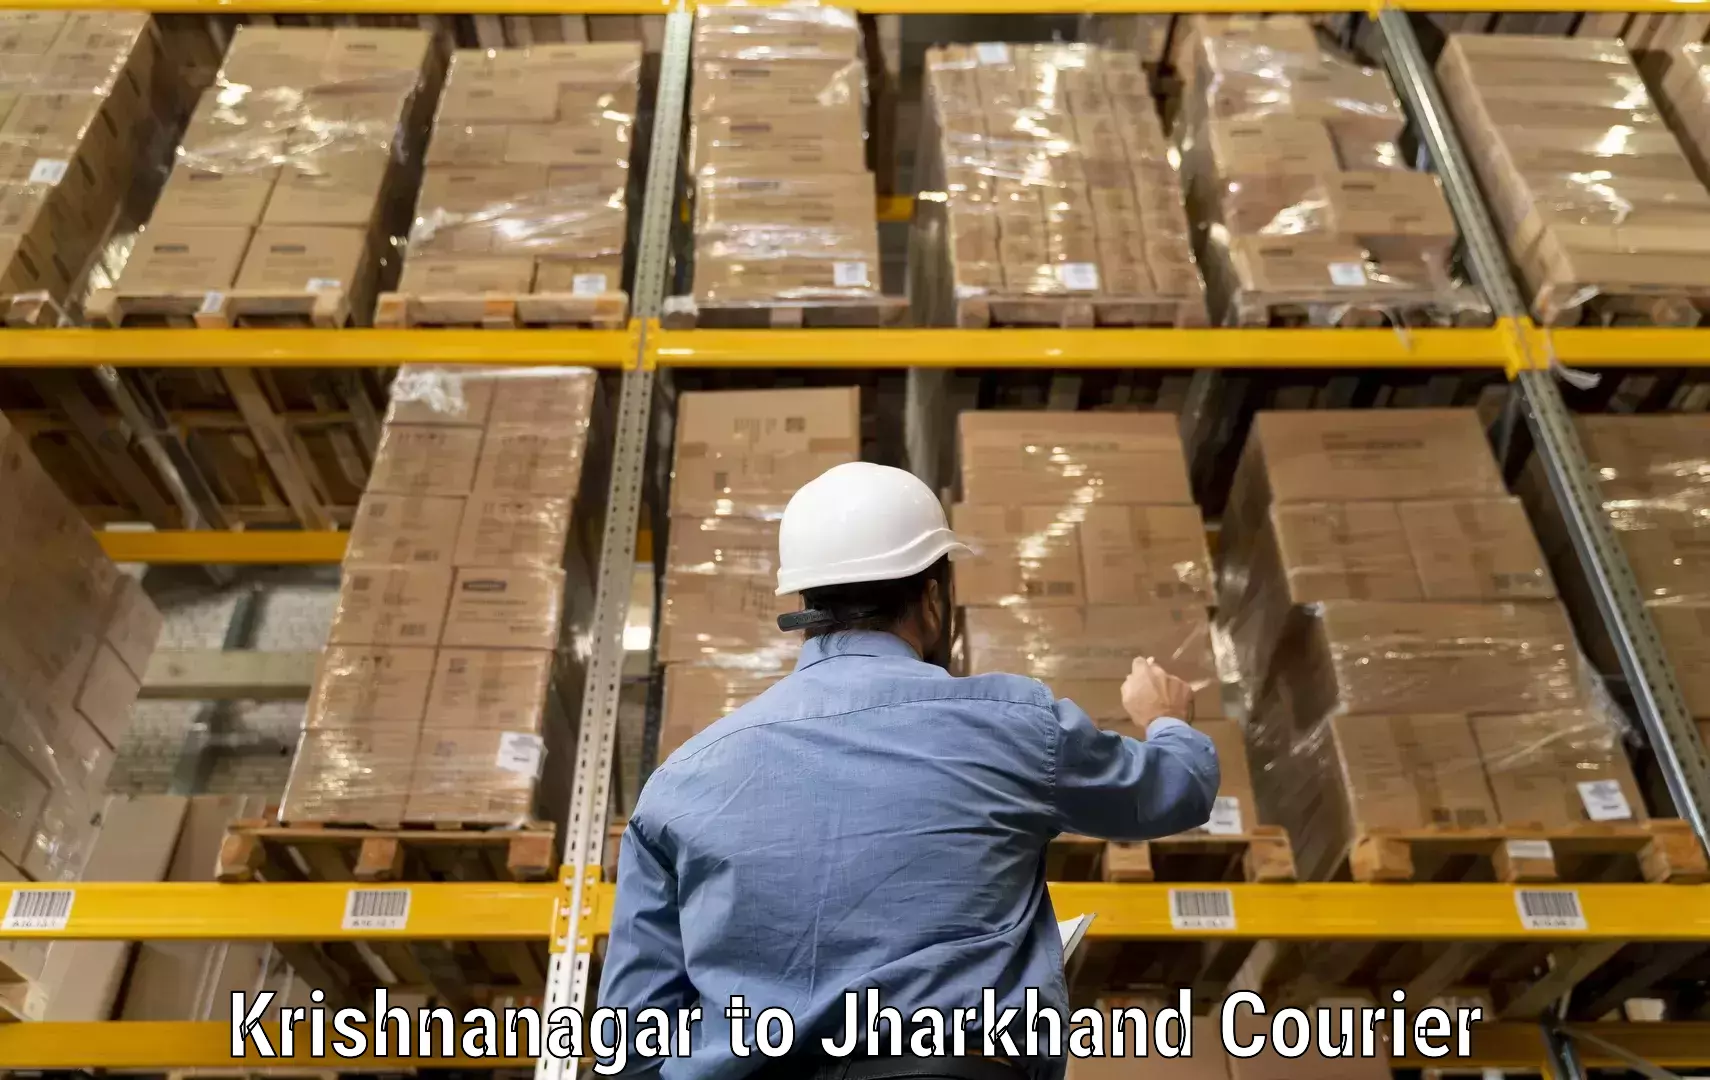 Cargo delivery service Krishnanagar to Ranchi